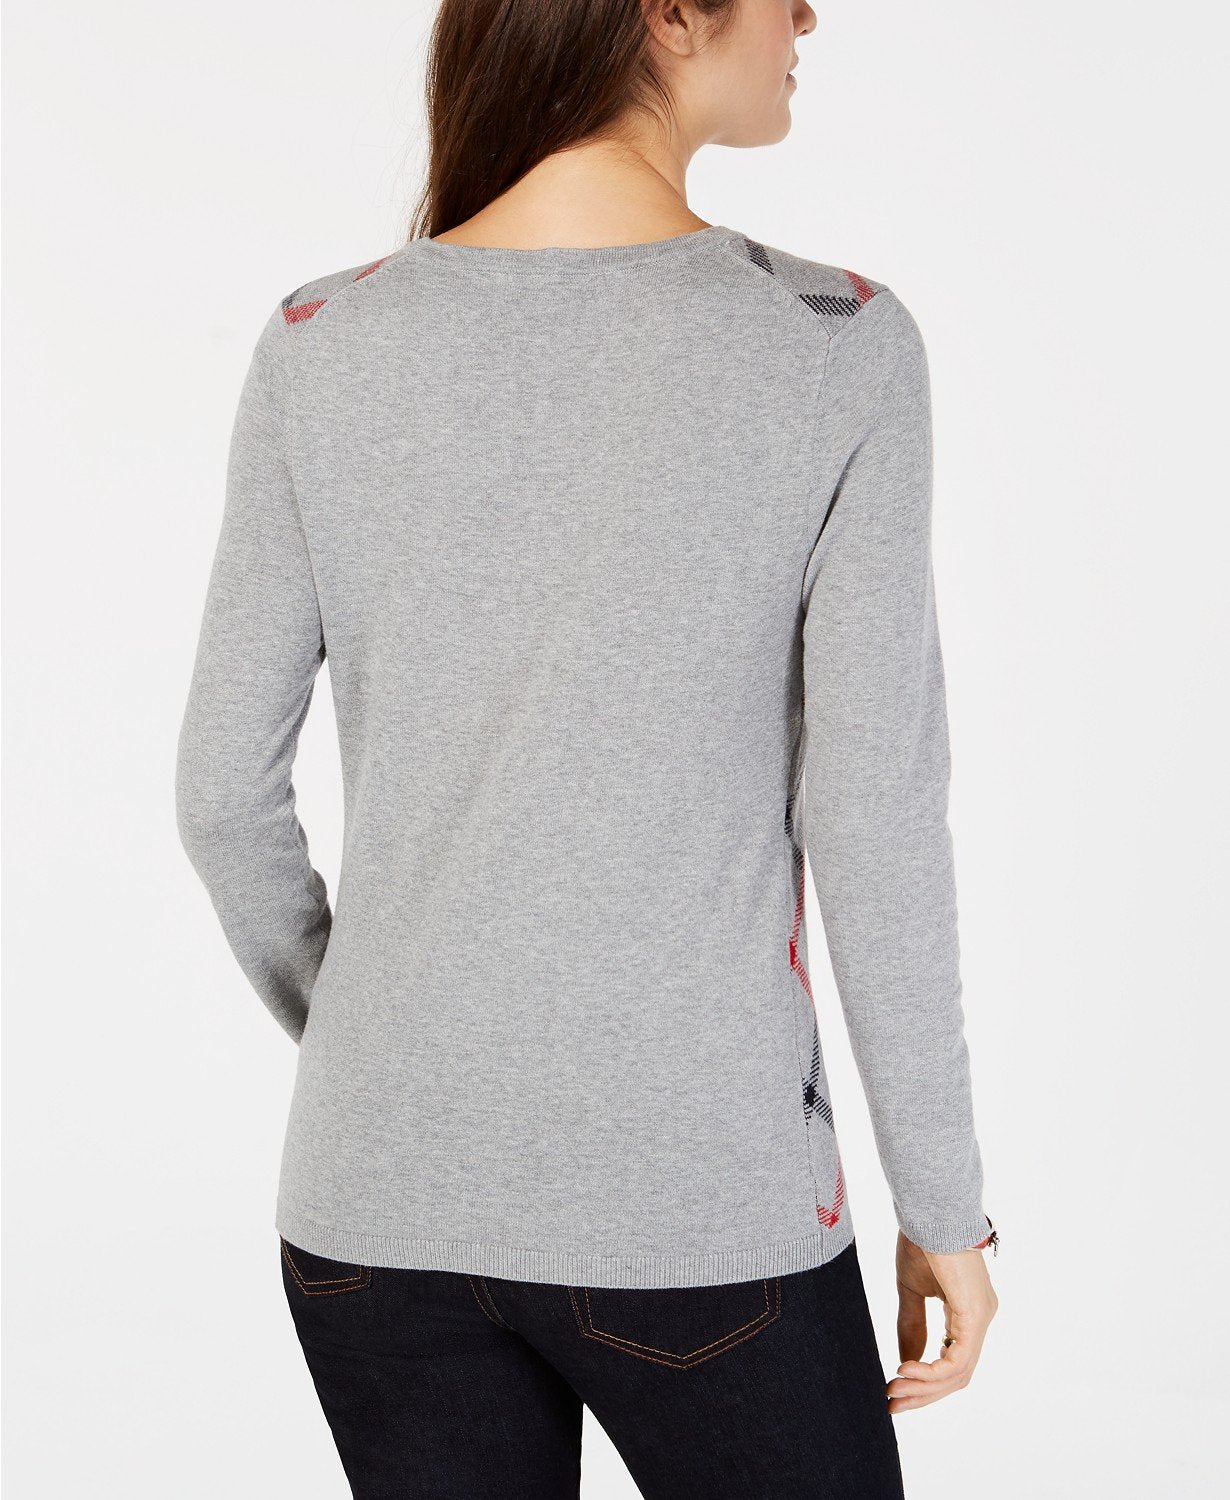 Tommy Hilfiger Womens Cotton Diagonal Plaid V-neck Sweater Large Grey - TopLine Fashion Lounge